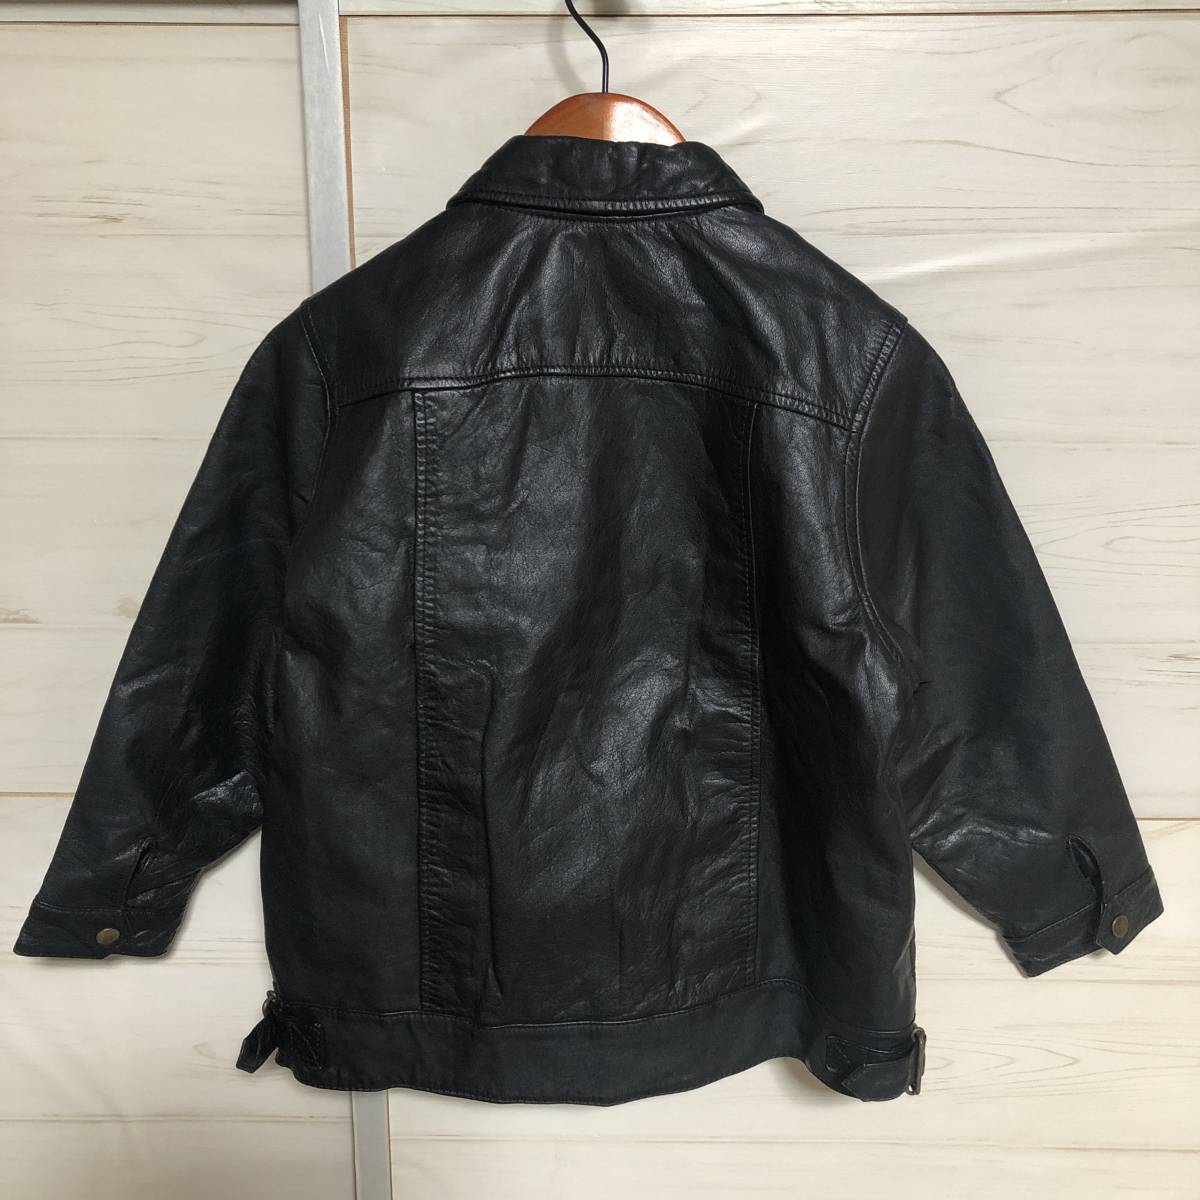 MINI BATSU Mini Ba-Tsu leather cow leather original leather real leather rider's jacket black child 120cm beautiful goods control C731